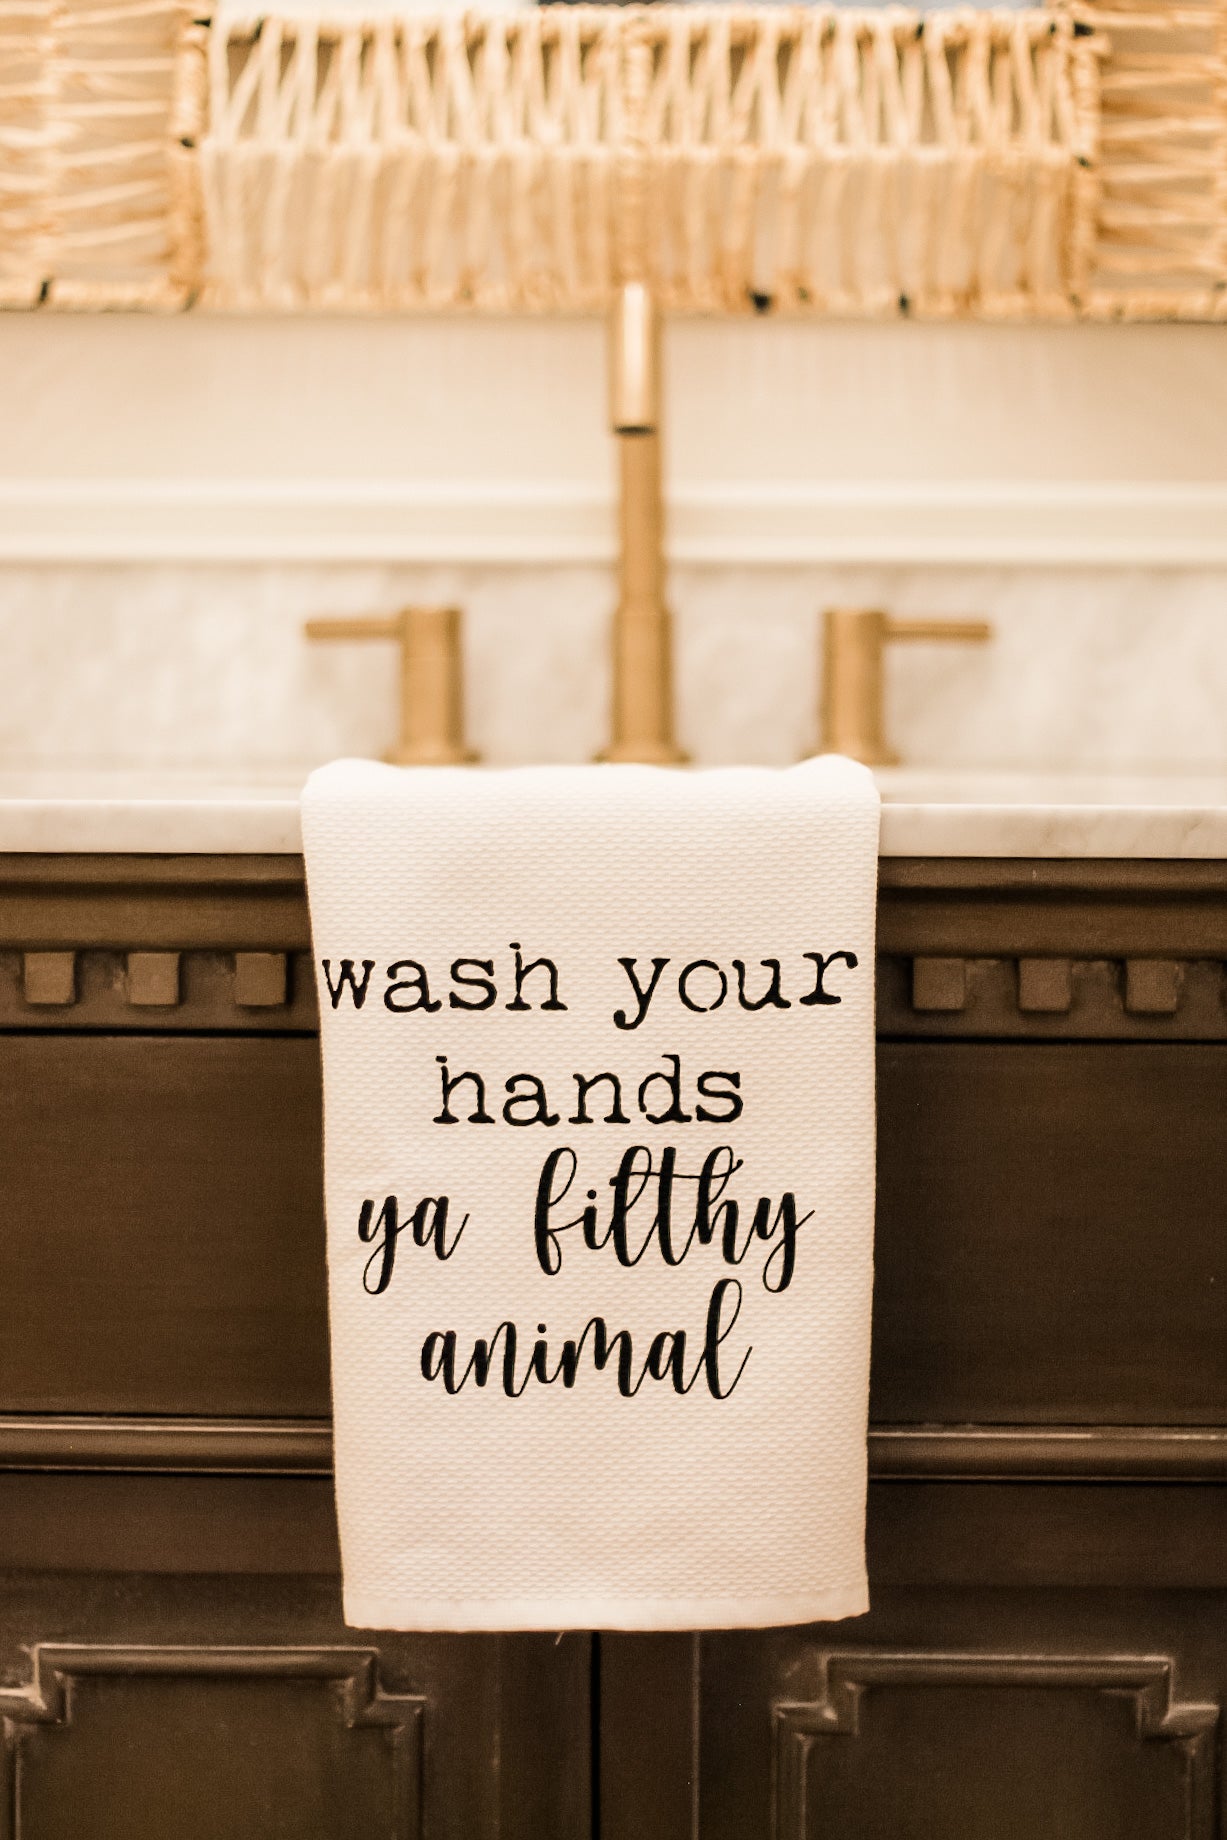 Wash Your Hands Ya Filthy Animal - Kitchen/Bathroom Hand Towel (Waffle Weave) - MoonlightMakers